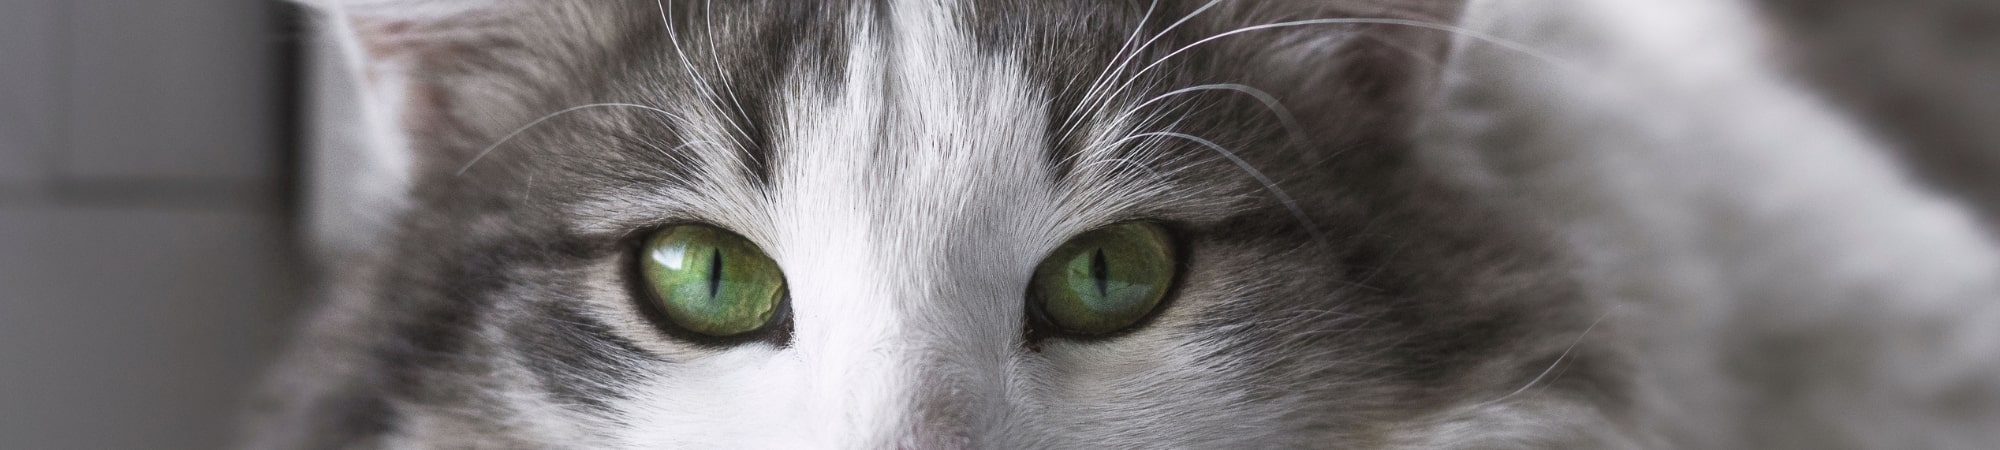 yeux vert de chat